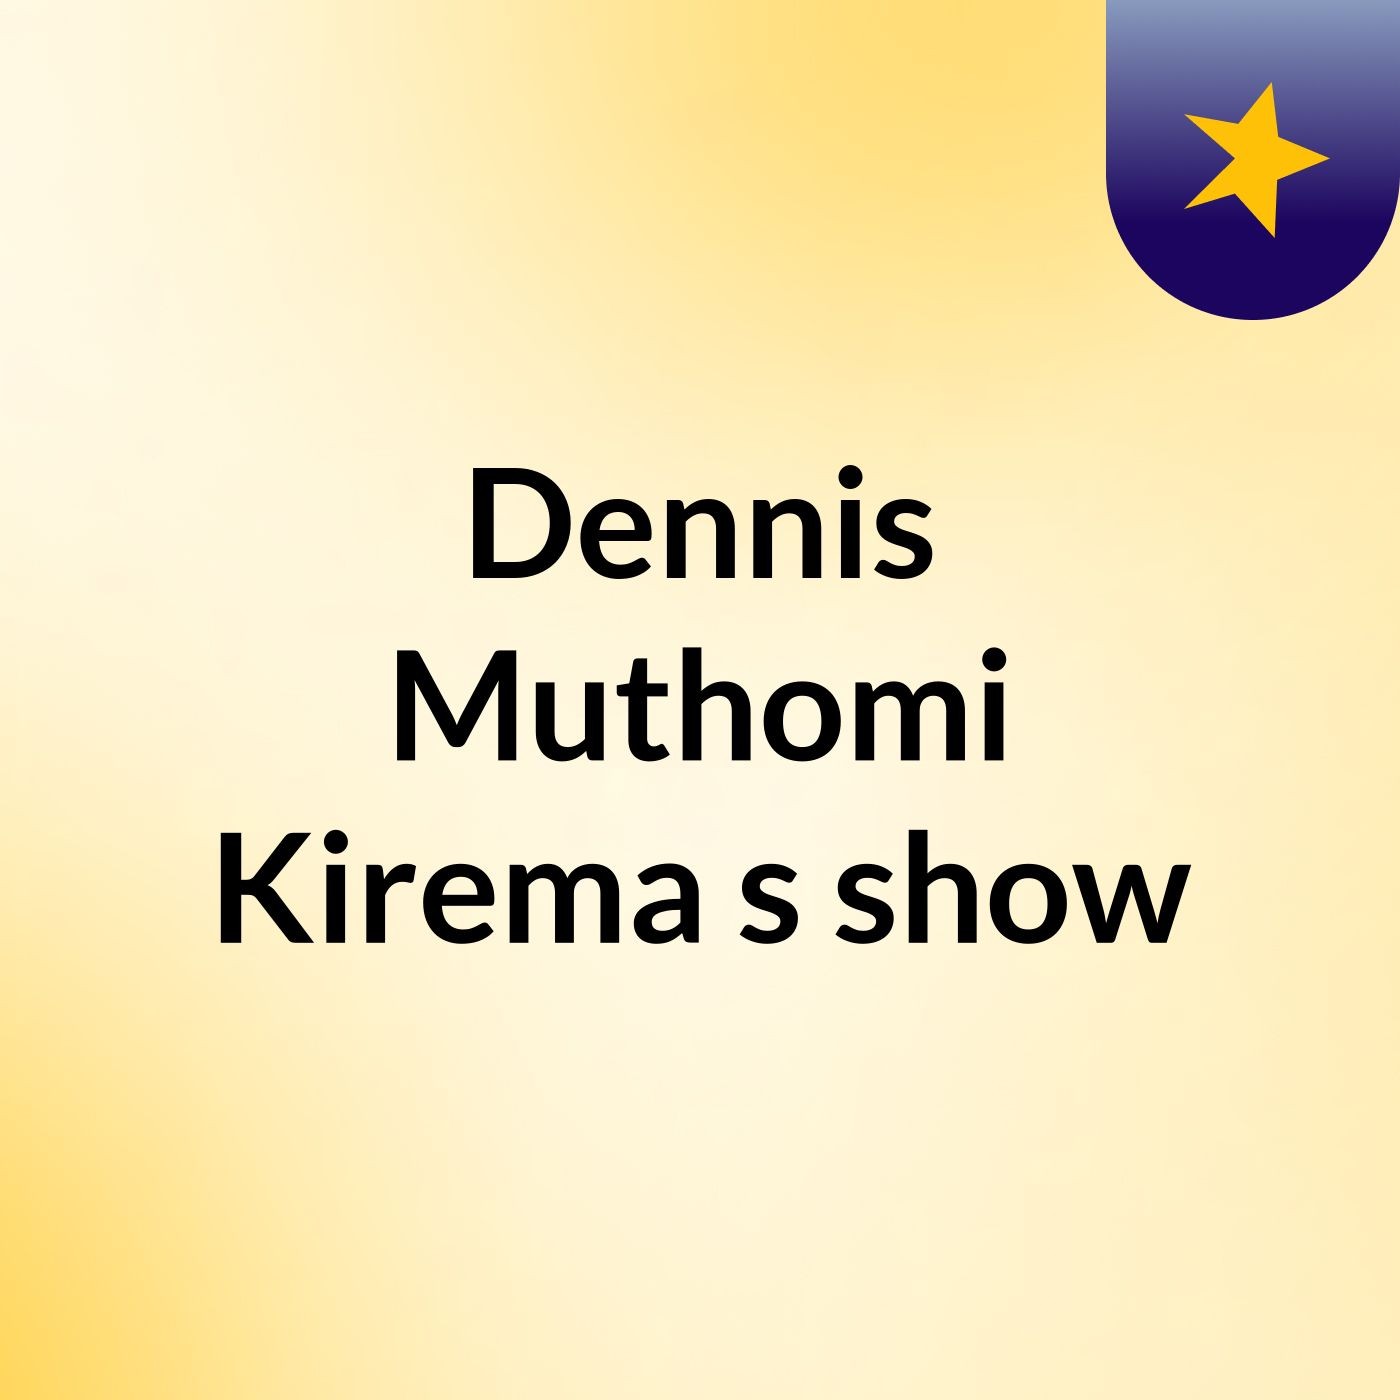 Dennis Muthomi Kirema's show